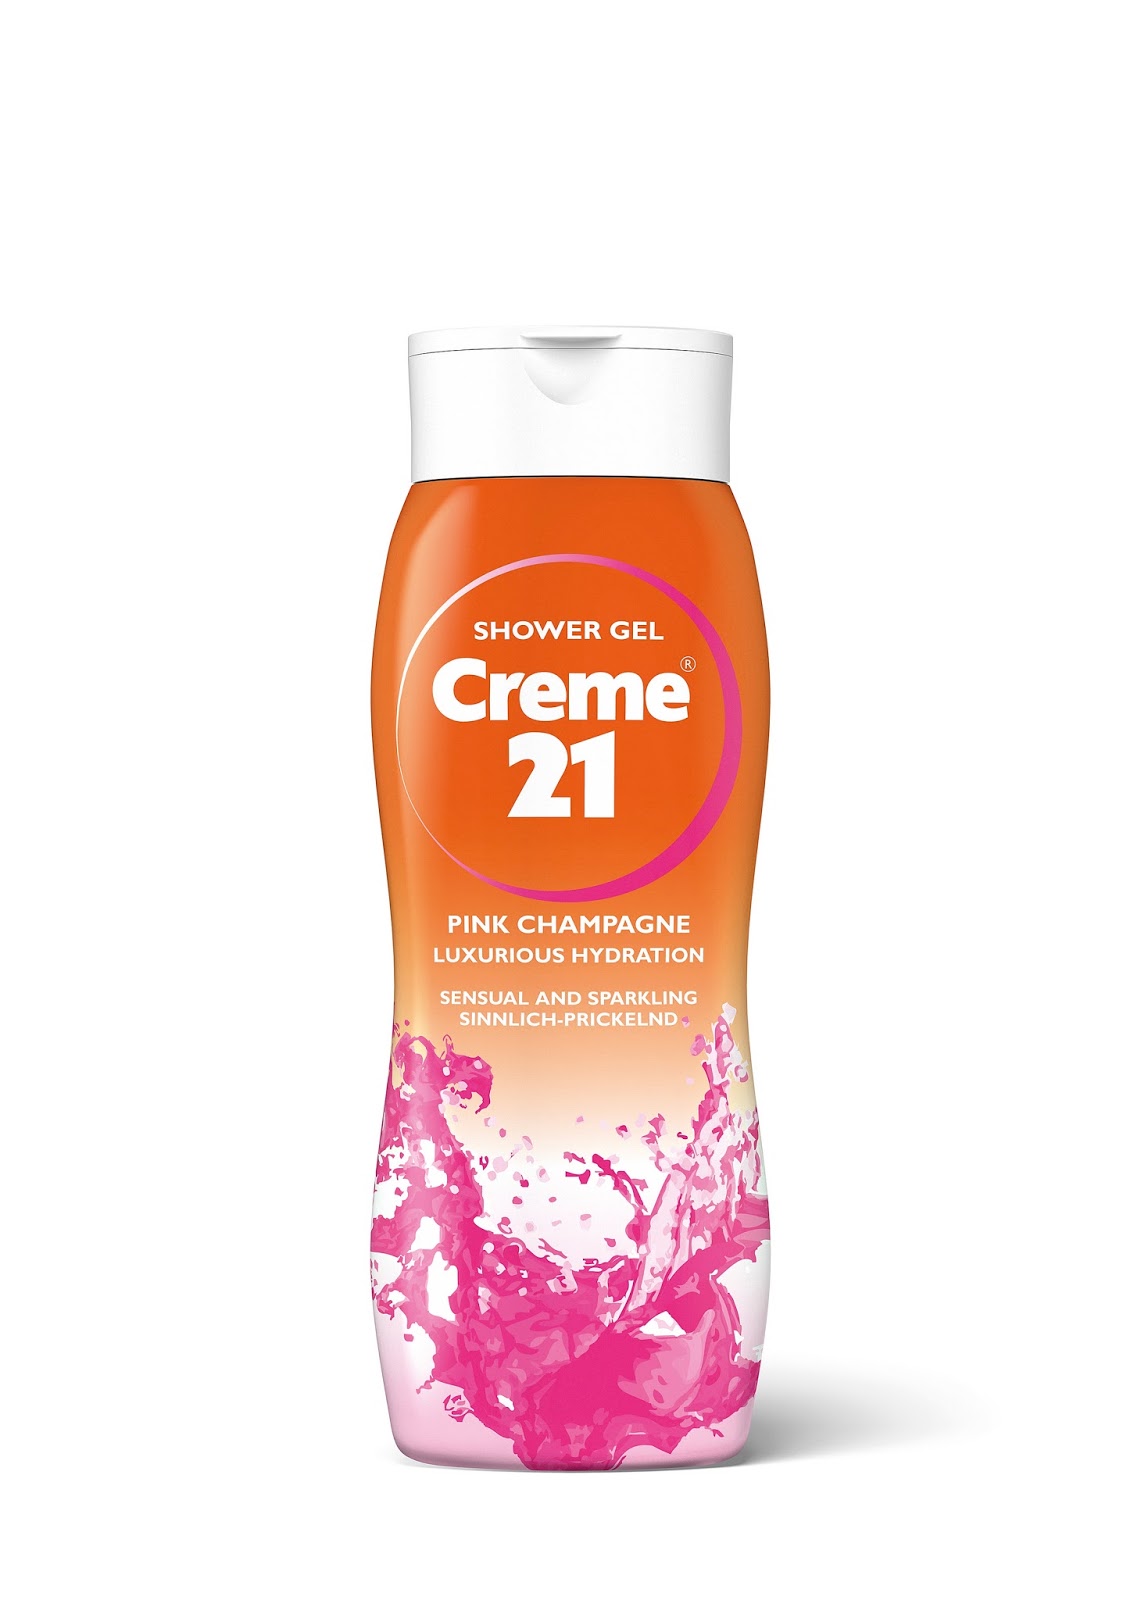 Shower cream gel. Creme Shower Gel. Гель для душа розовое шампанское. Гель для душа бренды. Creme 21 гель для рук.